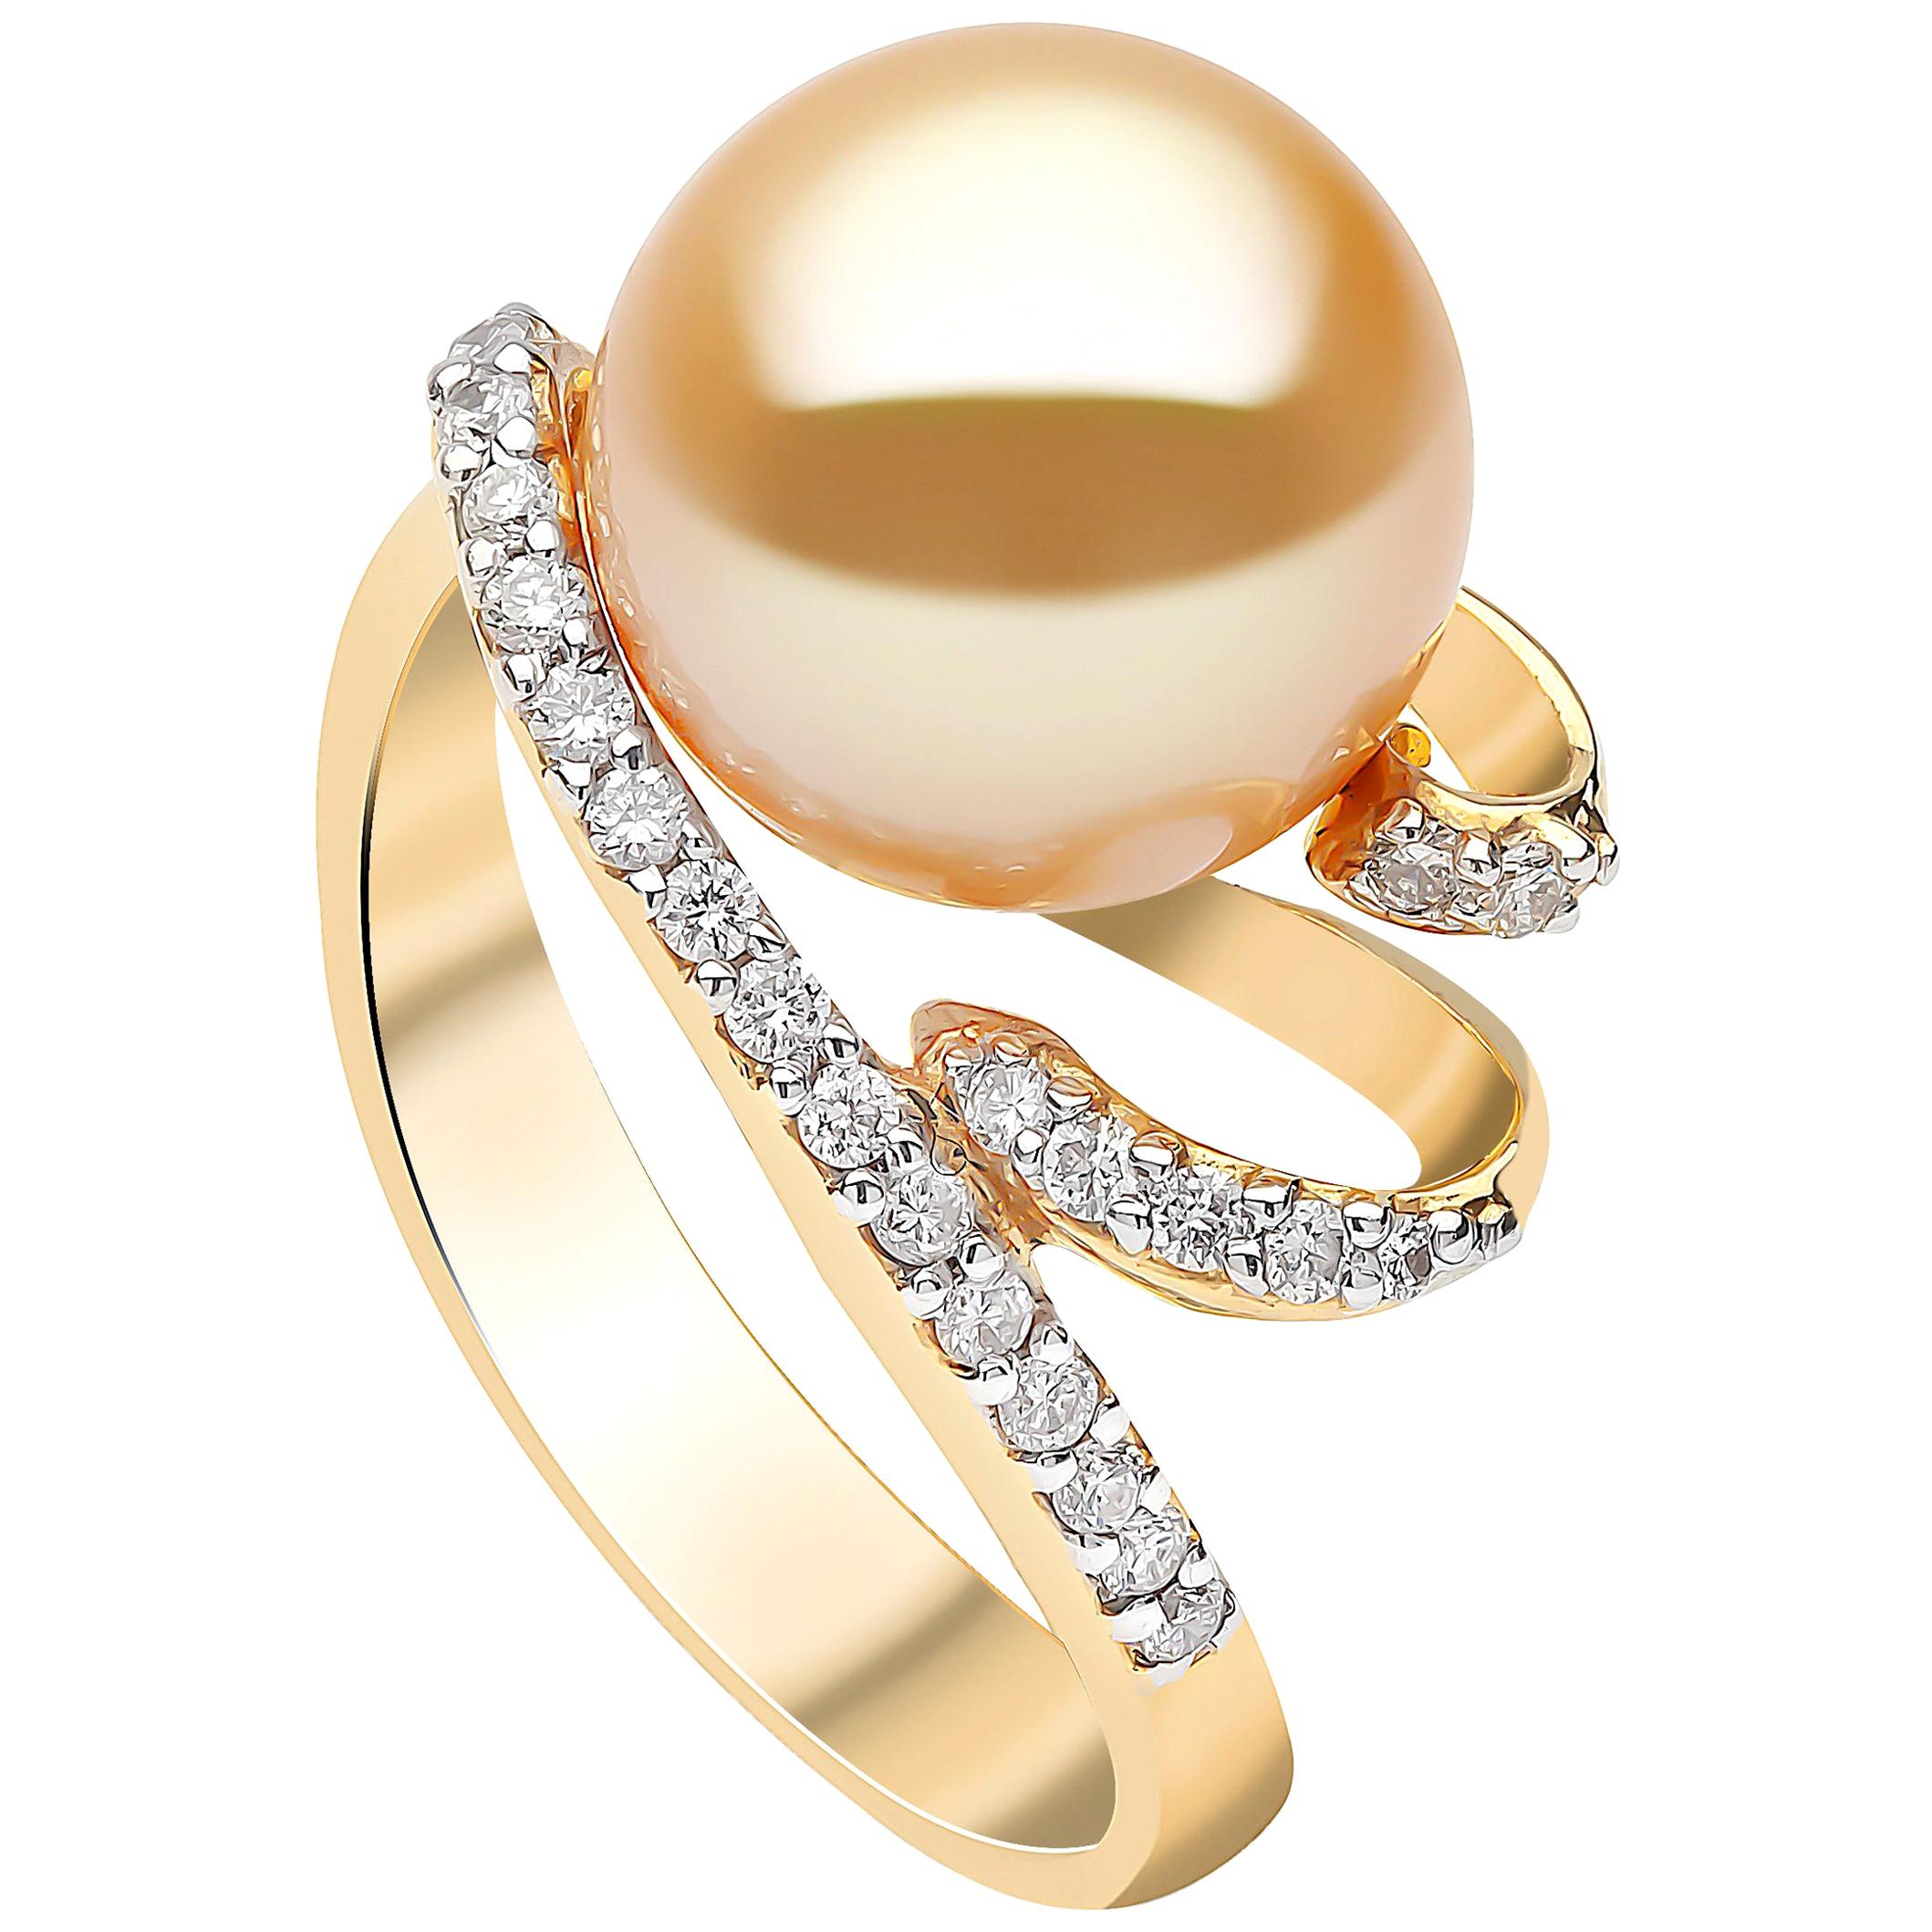 Yoko London Golden South Sea Pearl and Diamond Ring Set in 18 Karat Yellow Gold For Sale